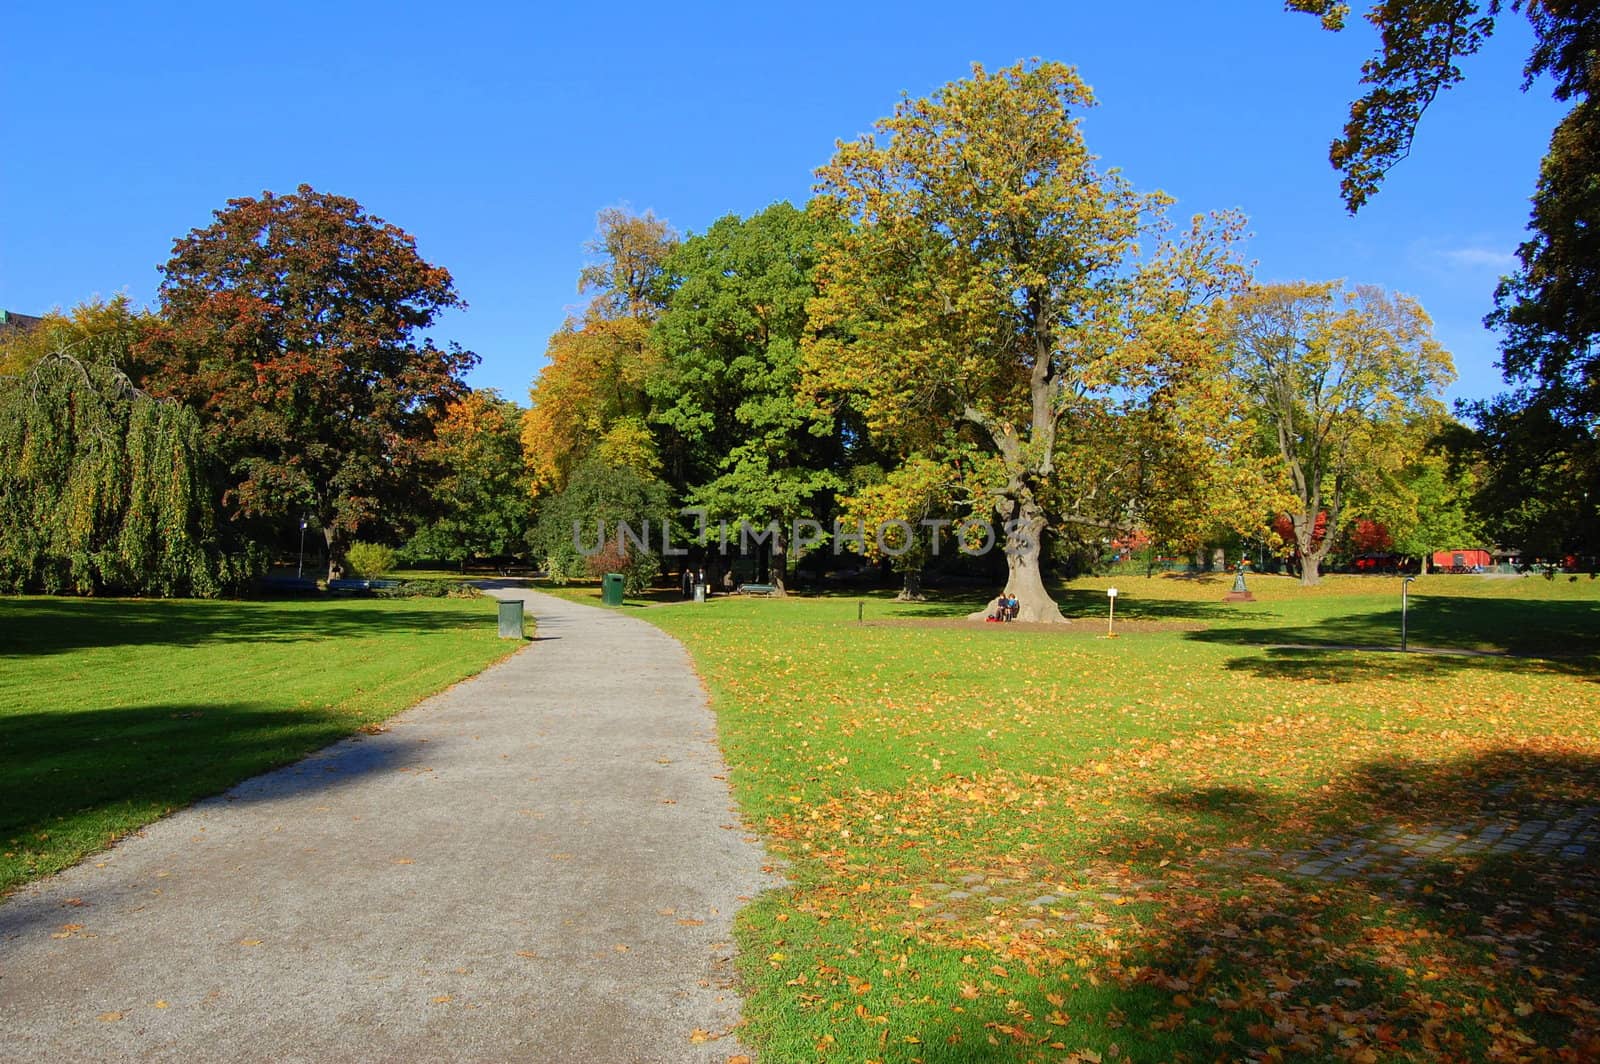 A path in the park Humlegården in Stockholm.